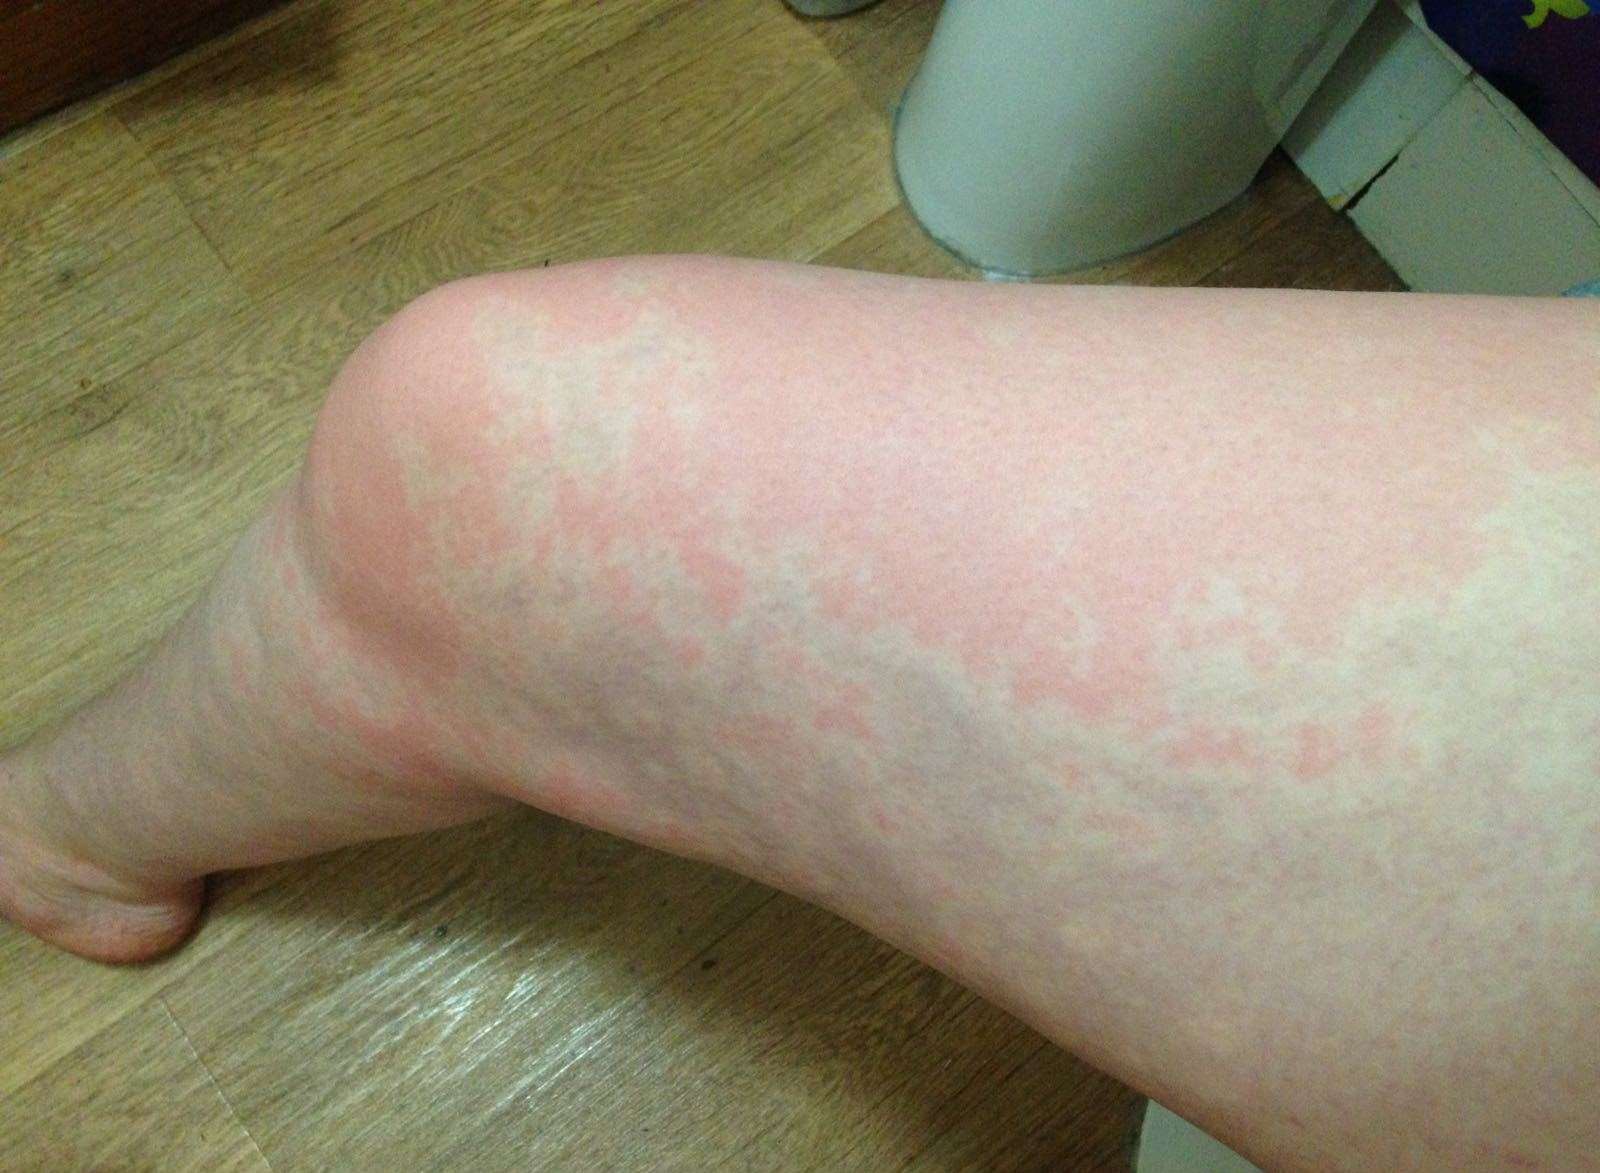 One of the symptoms is a burning rash on Megan's leg